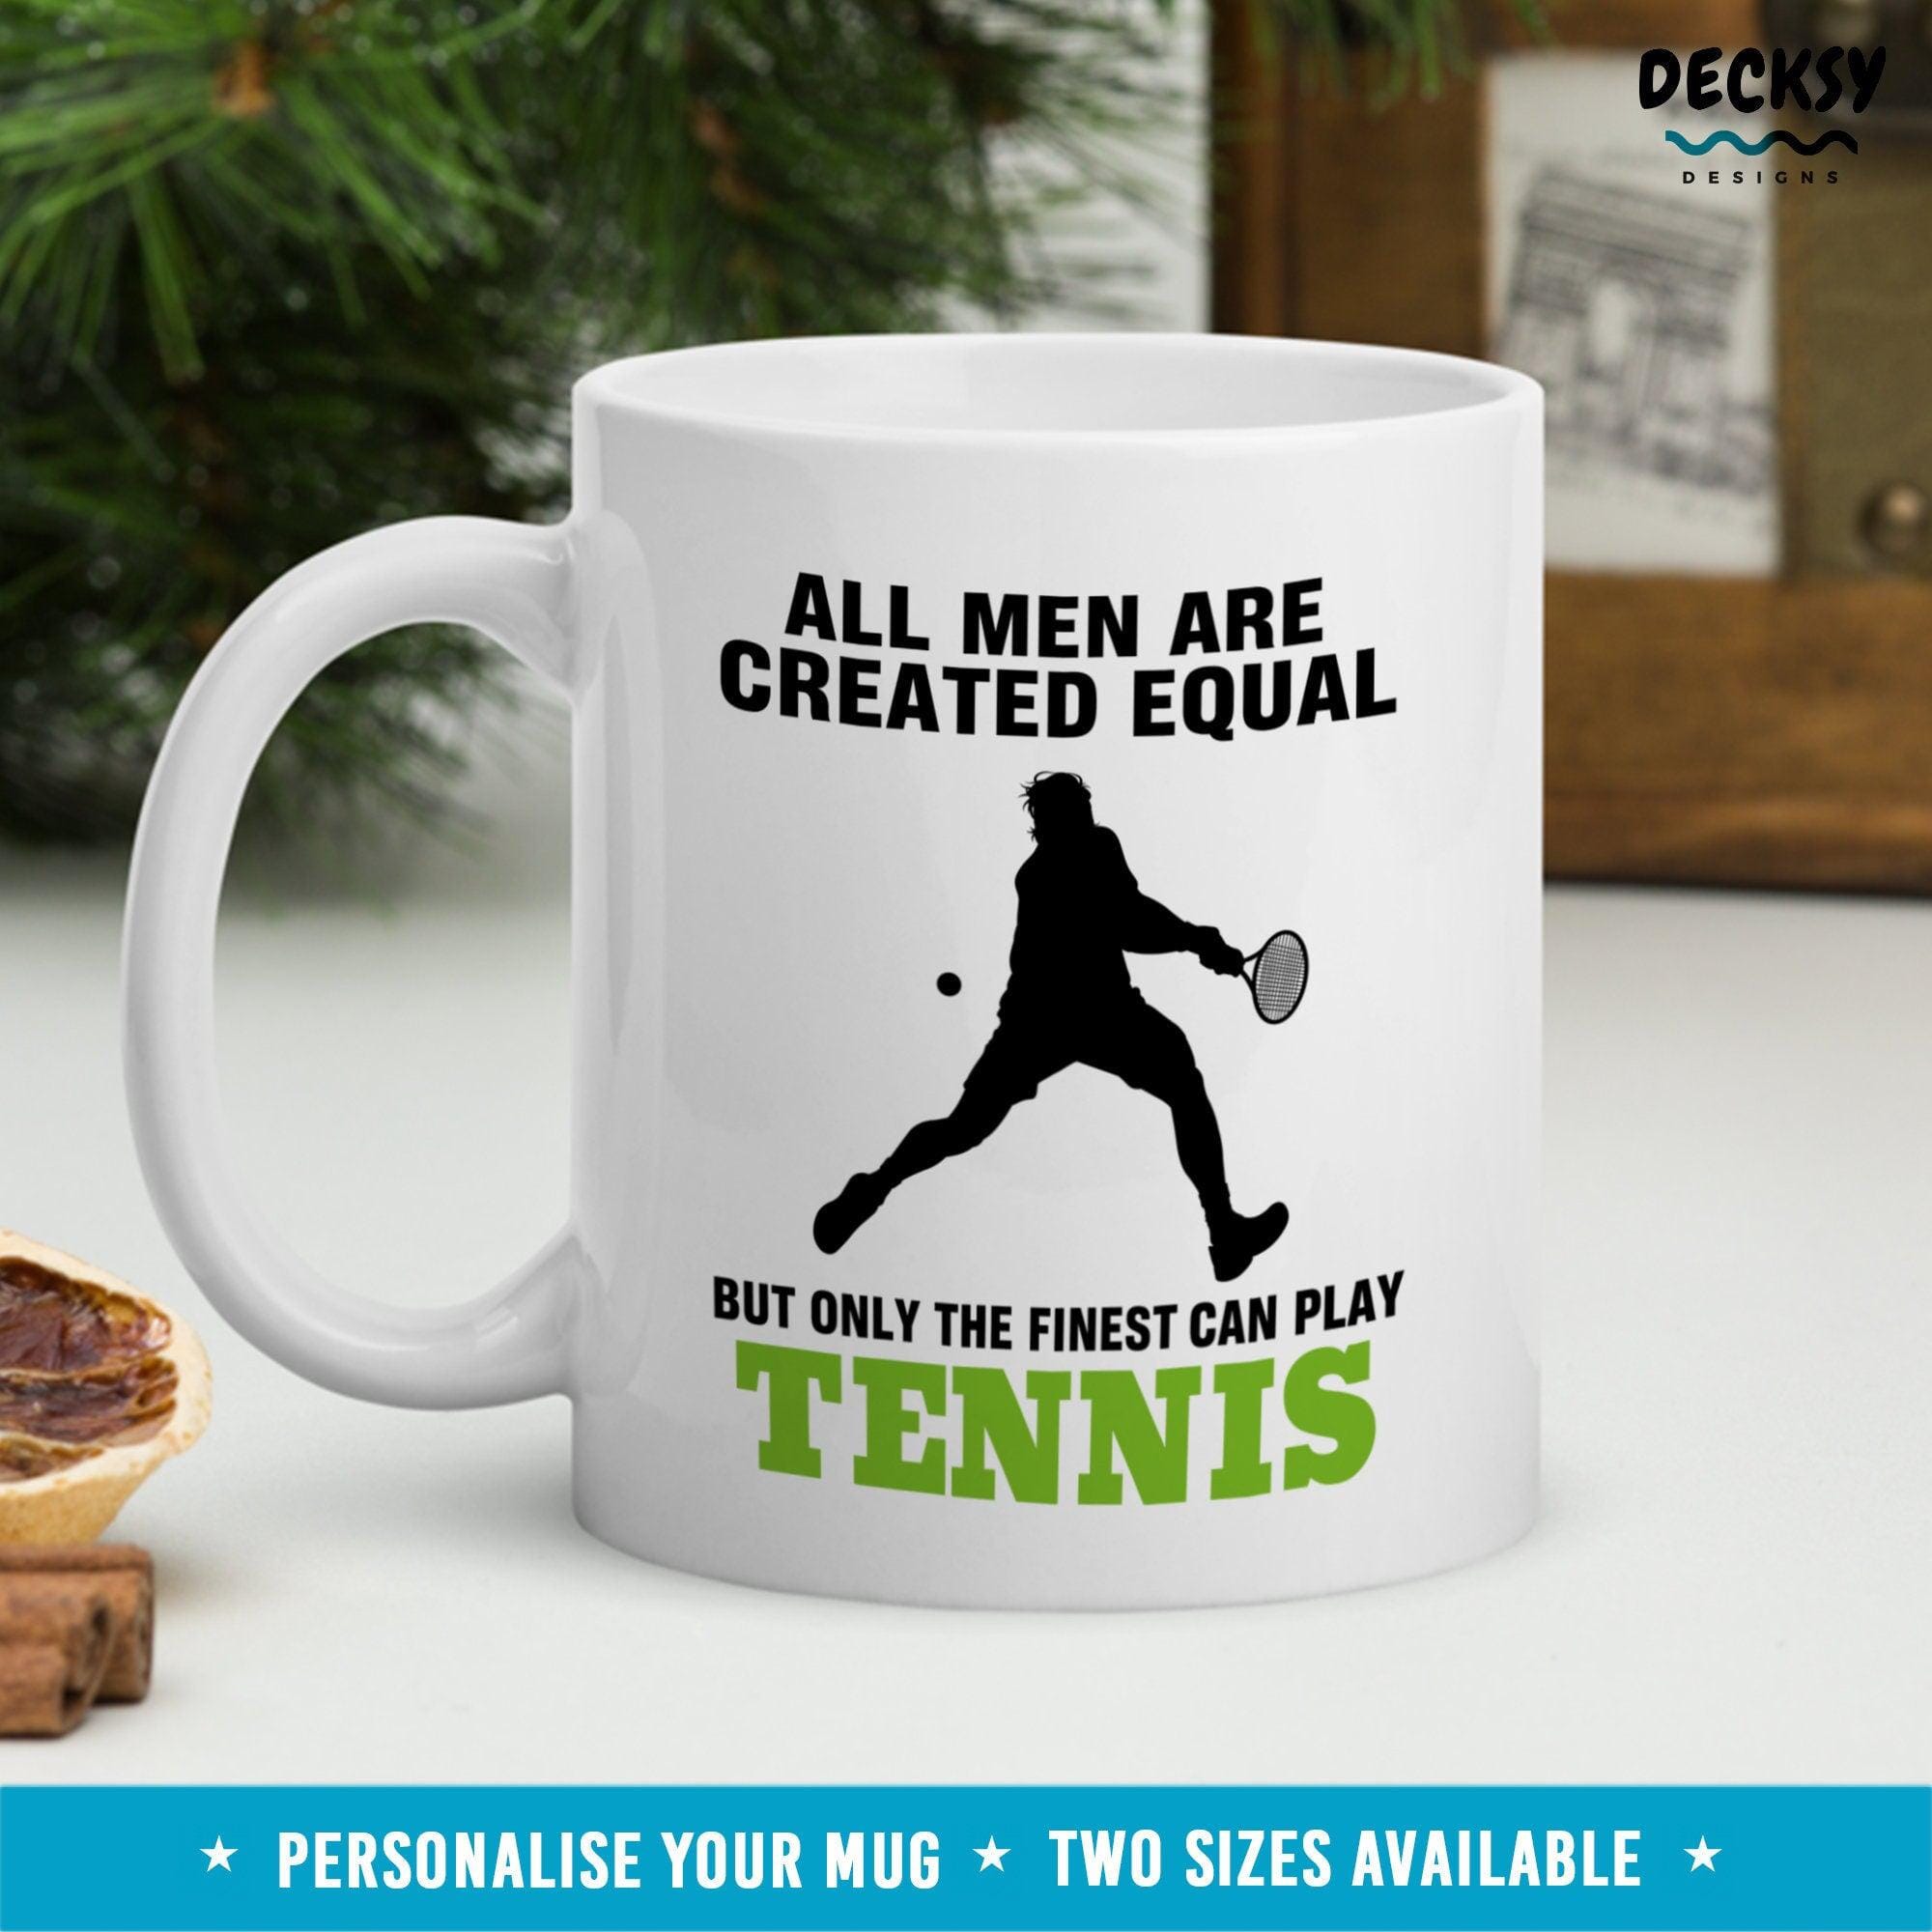 Tennis Coffee Mug for Men, Custom Tennis Gift-Home & Living:Kitchen & Dining:Drink & Barware:Drinkware:Mugs-DecksyDesigns-White Mug 11 oz-NO PERSONALISATION-DecksyDesigns